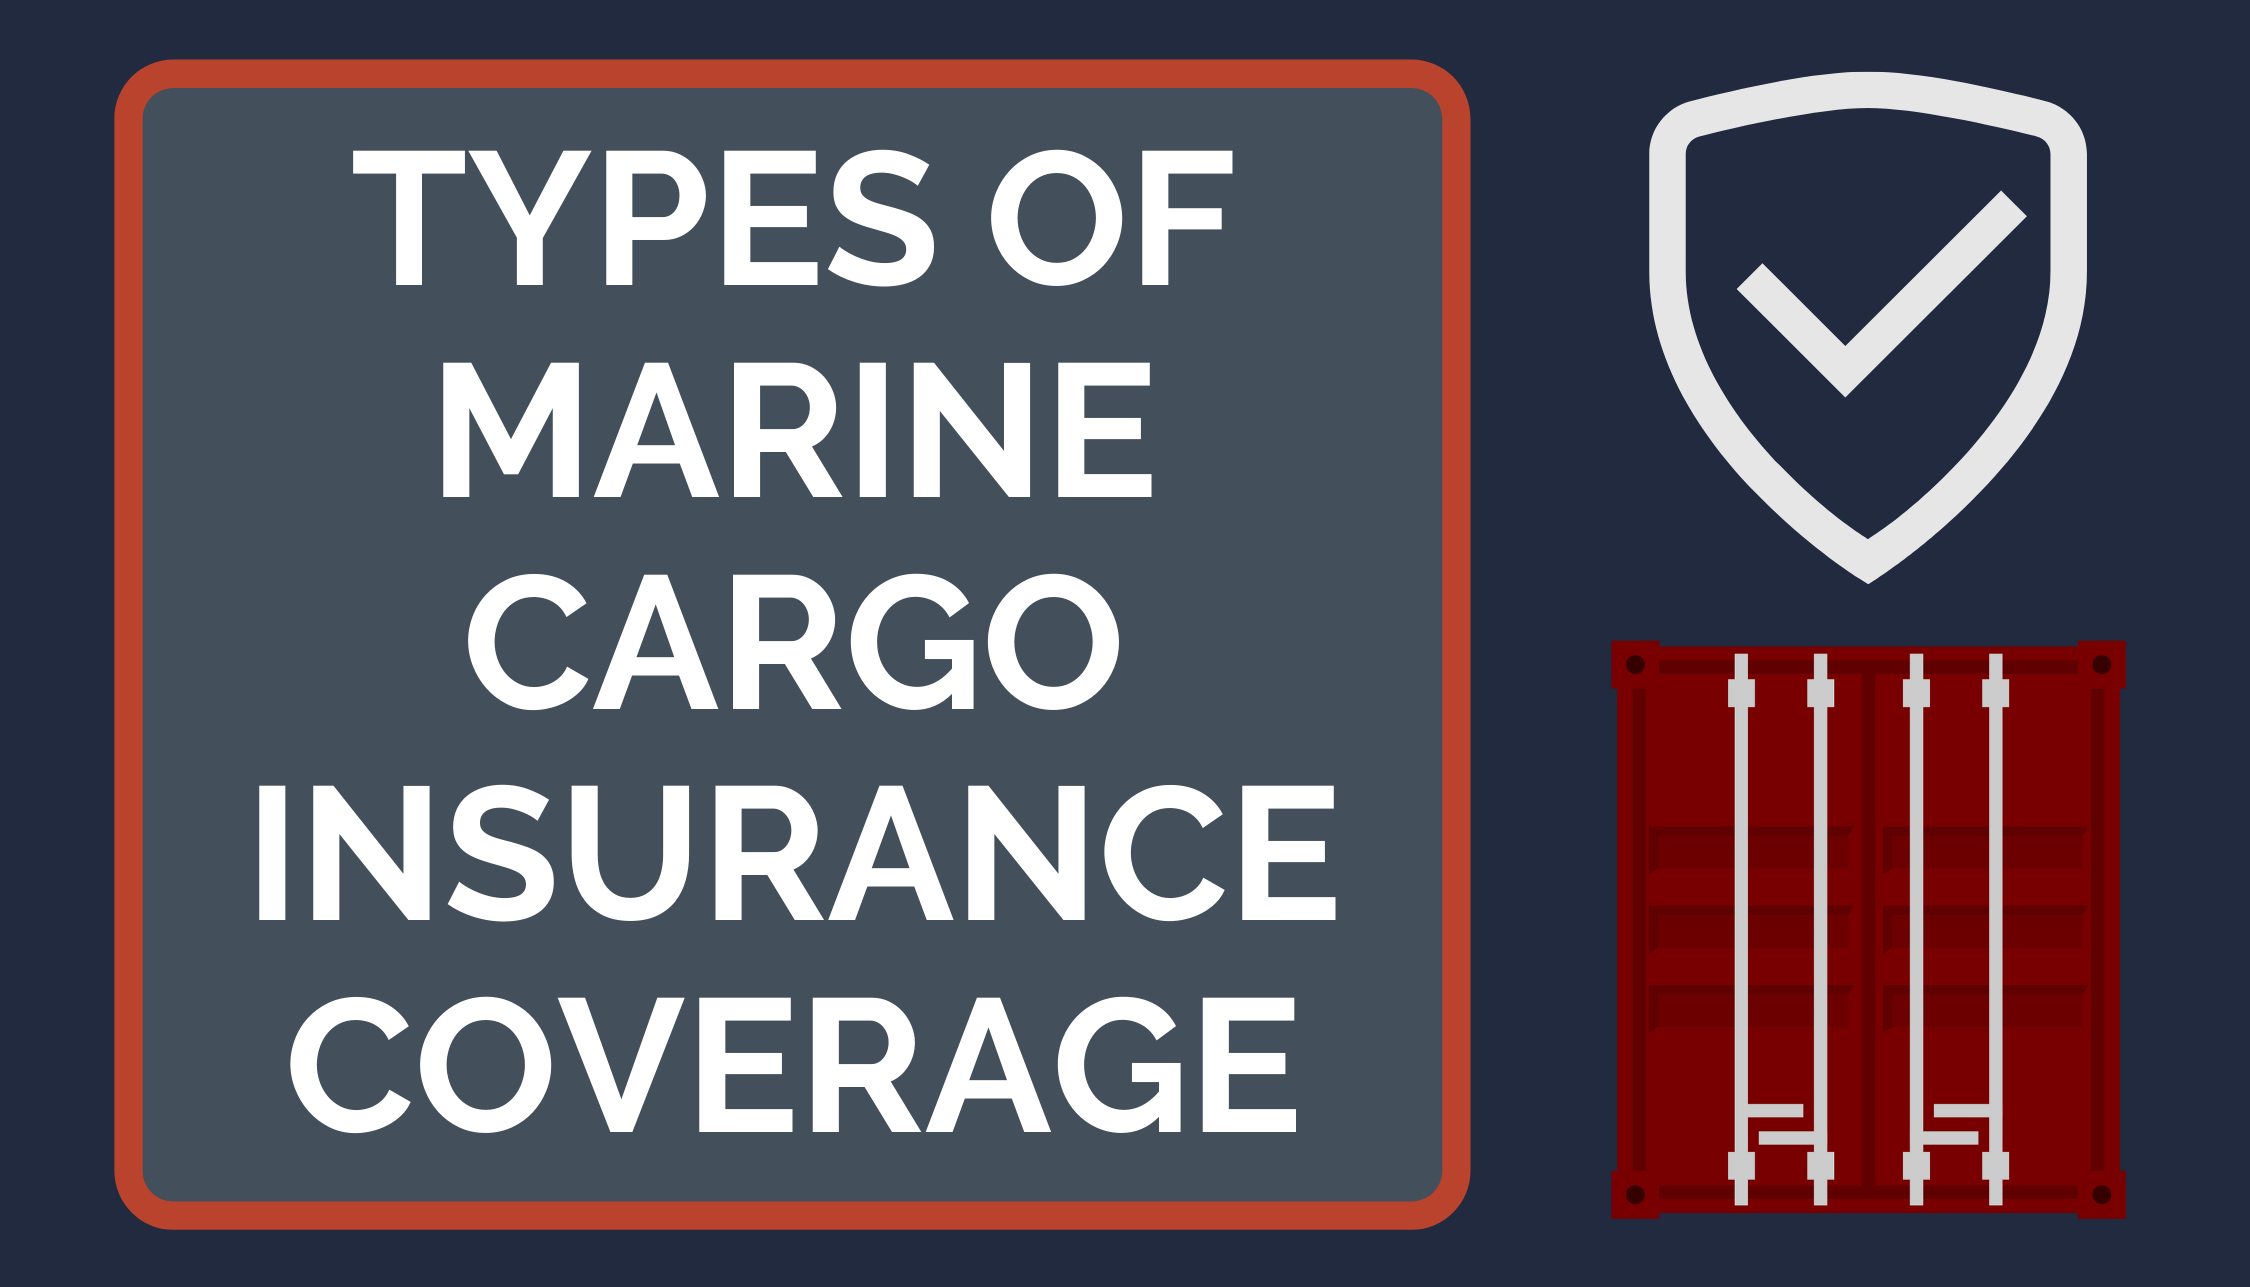 Types of Marine Cargo Insurance Coverage